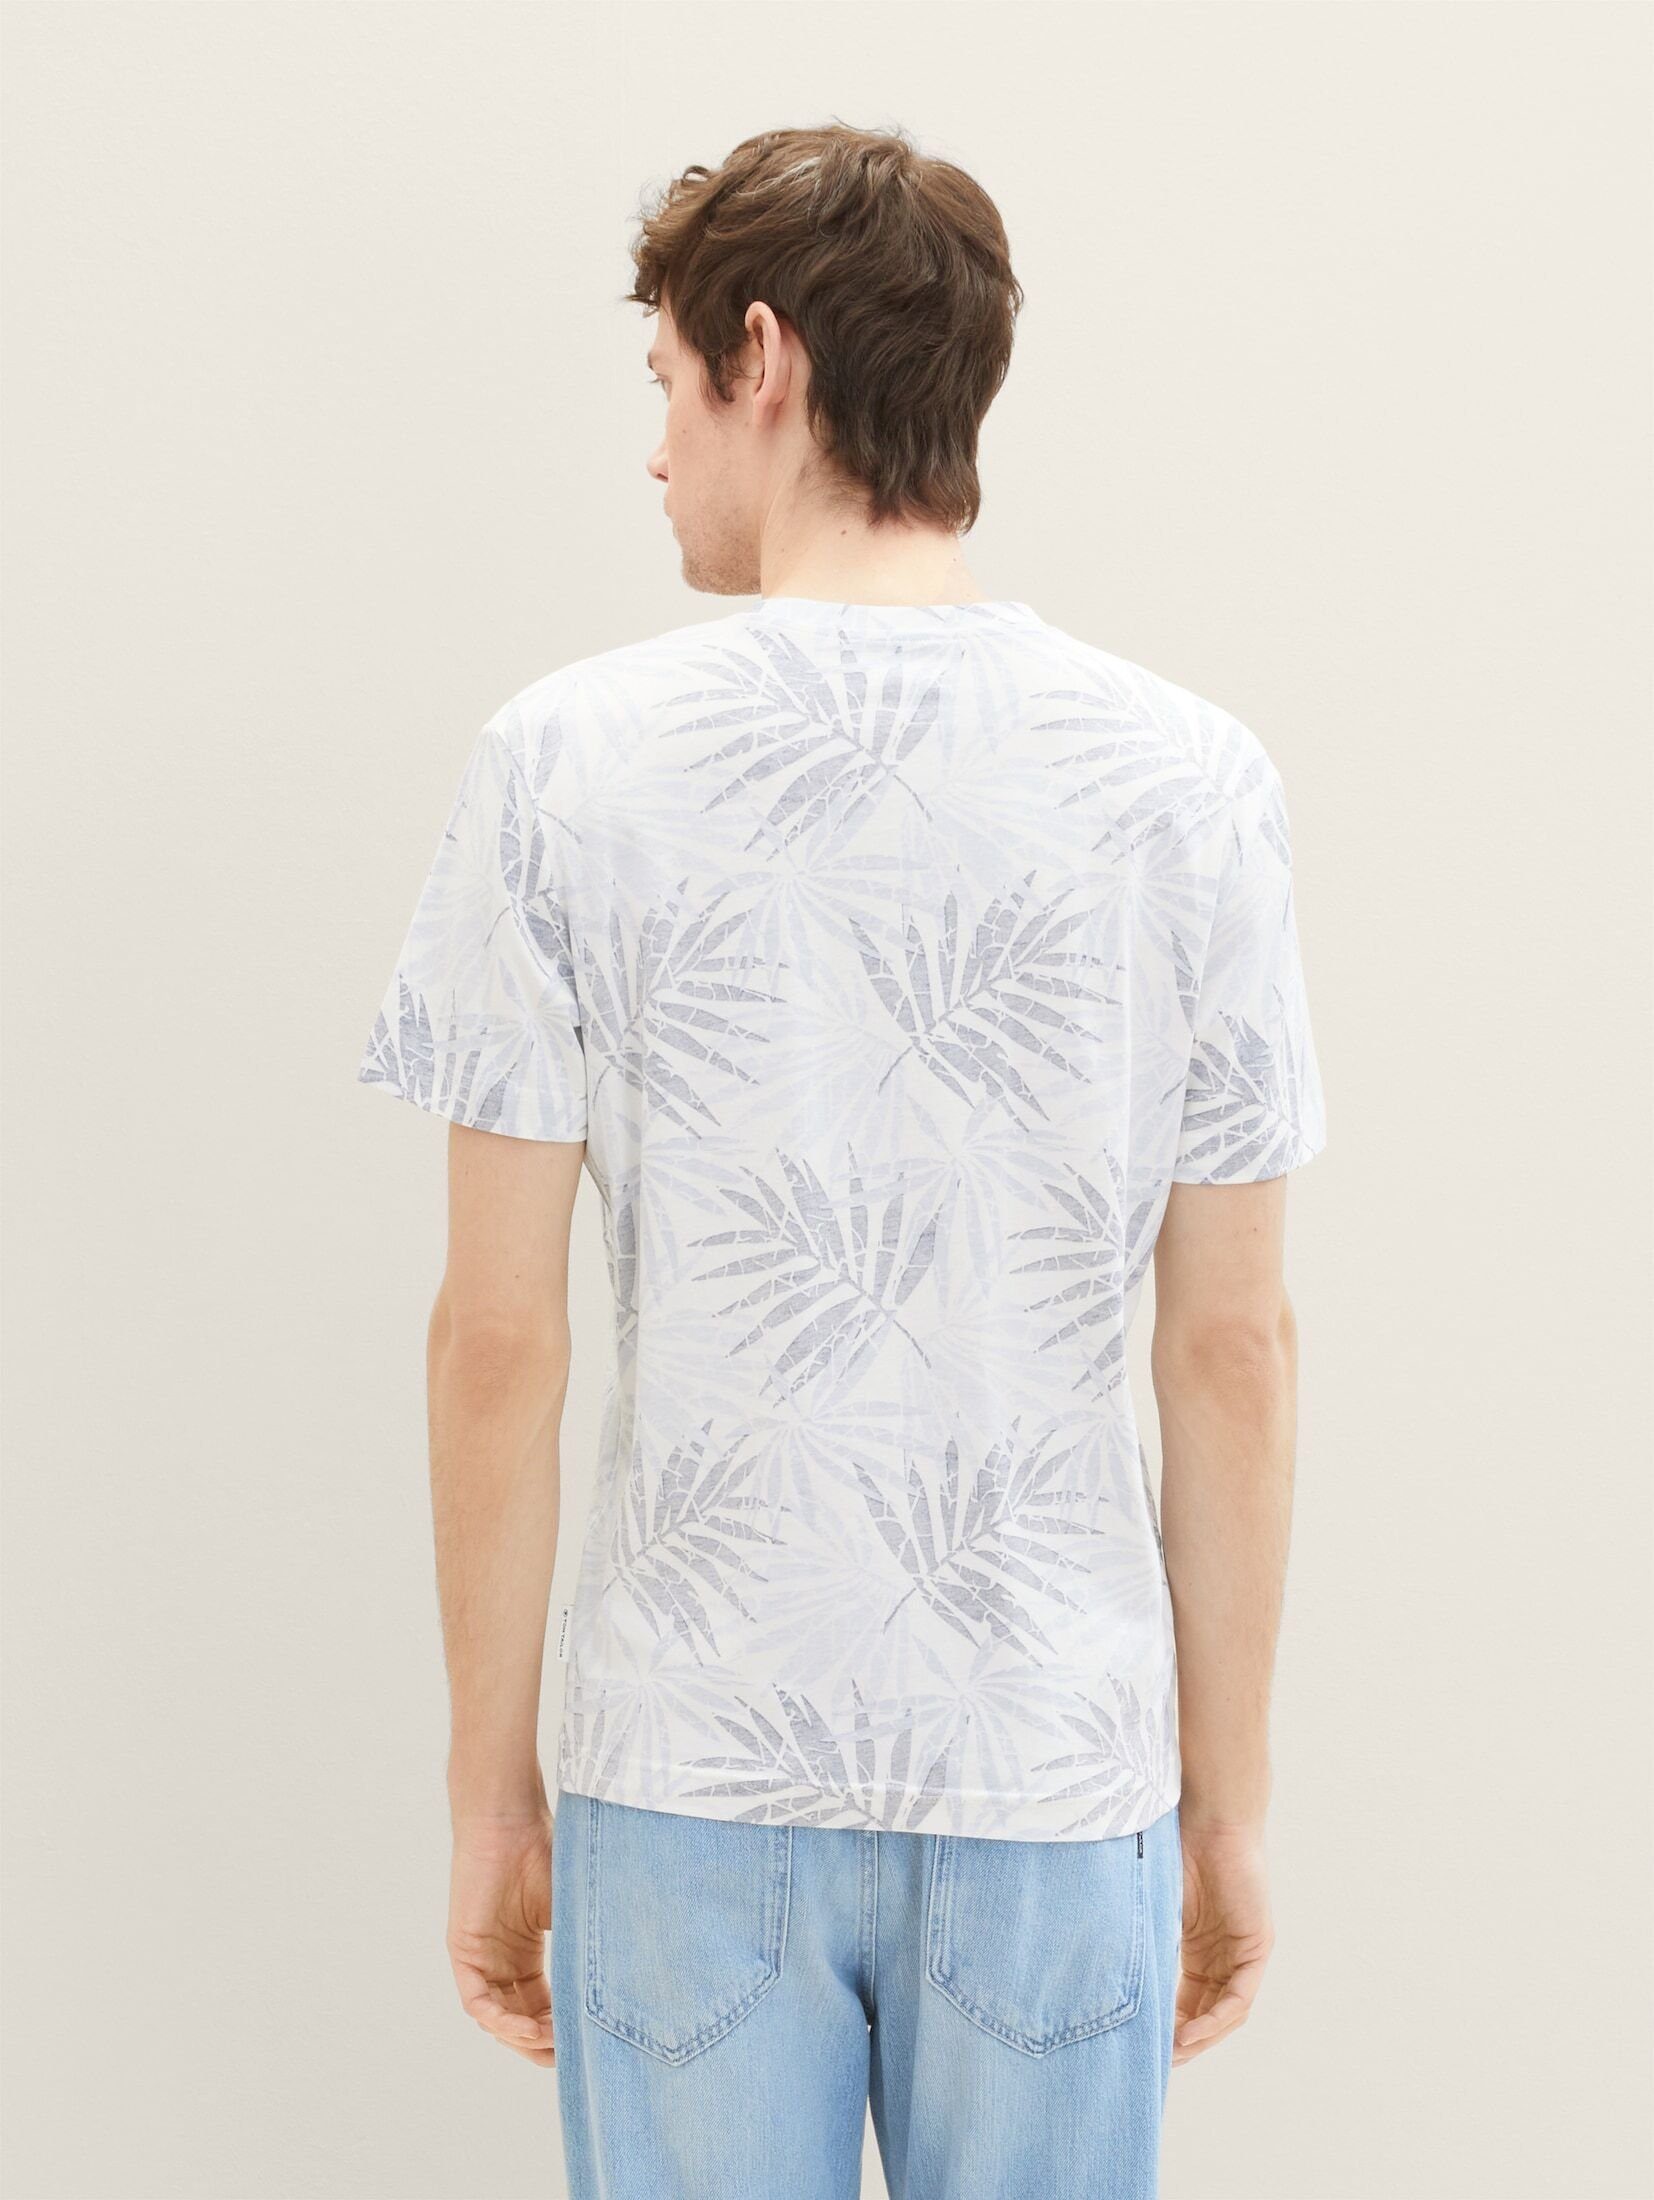 TOM TAILOR Allover-Print tonal T-Shirt design blue mit T-Shirt light leaf